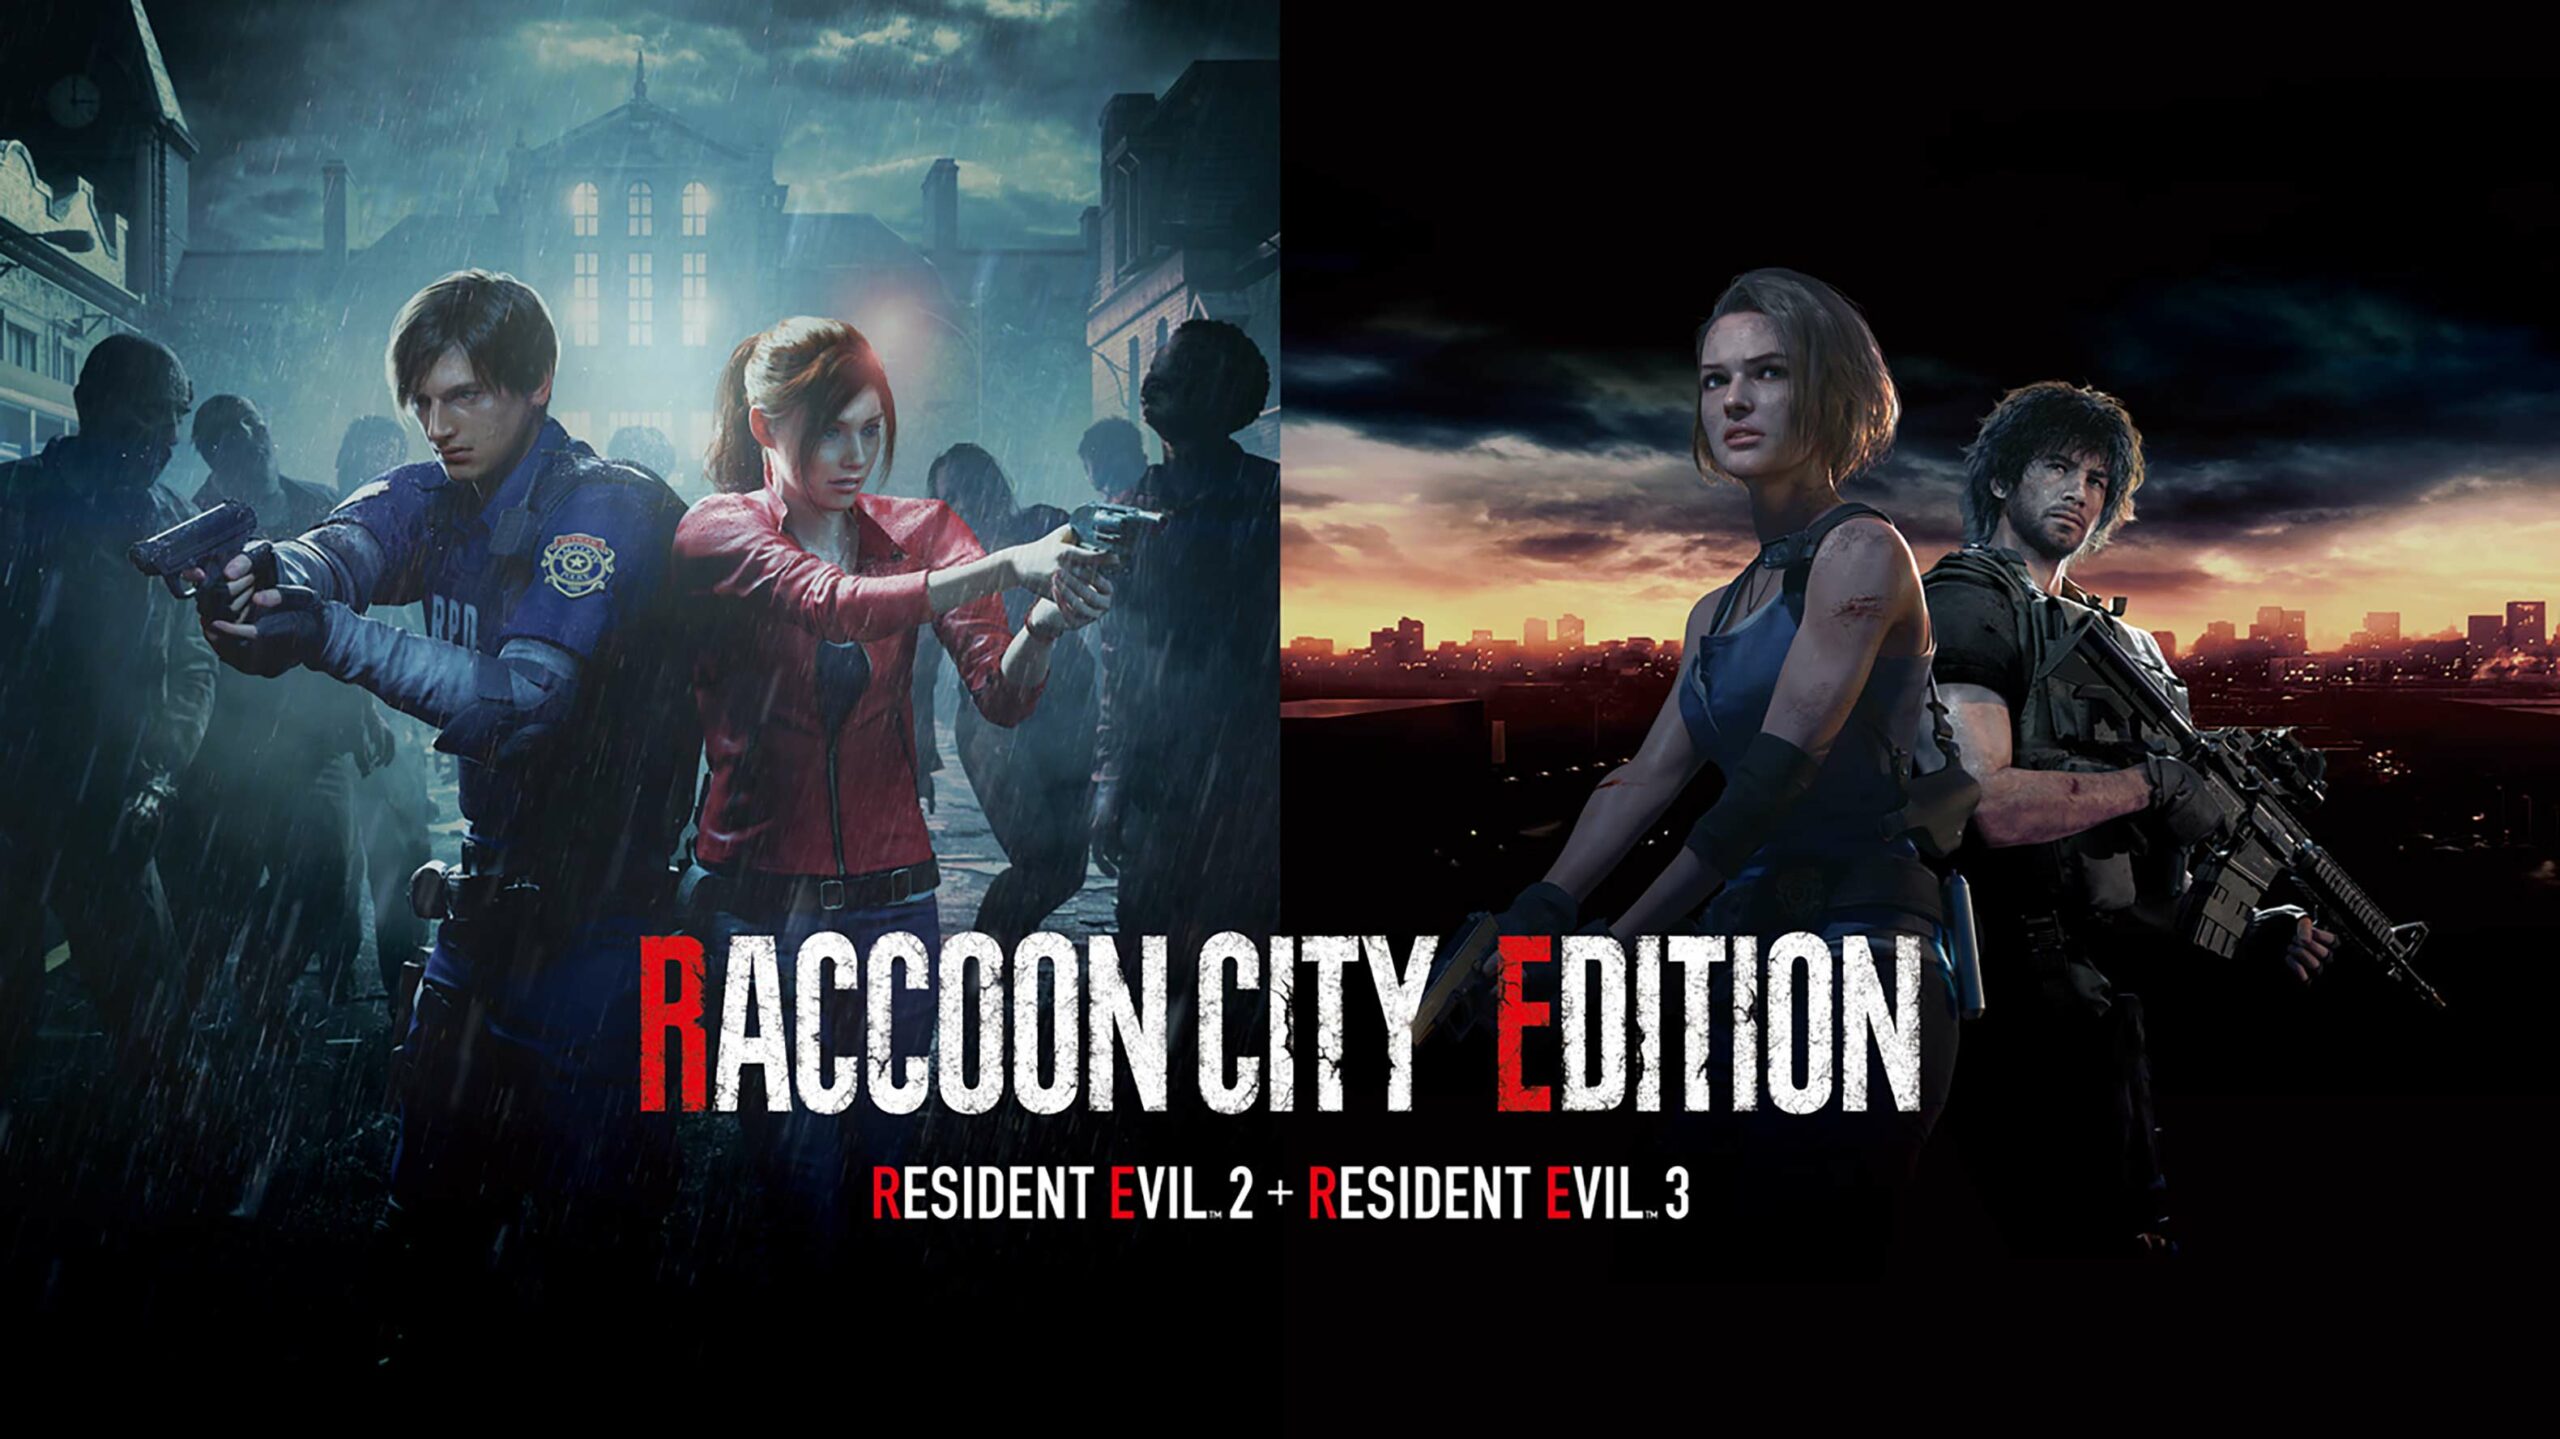 Resident Evil Raccoon City Edition